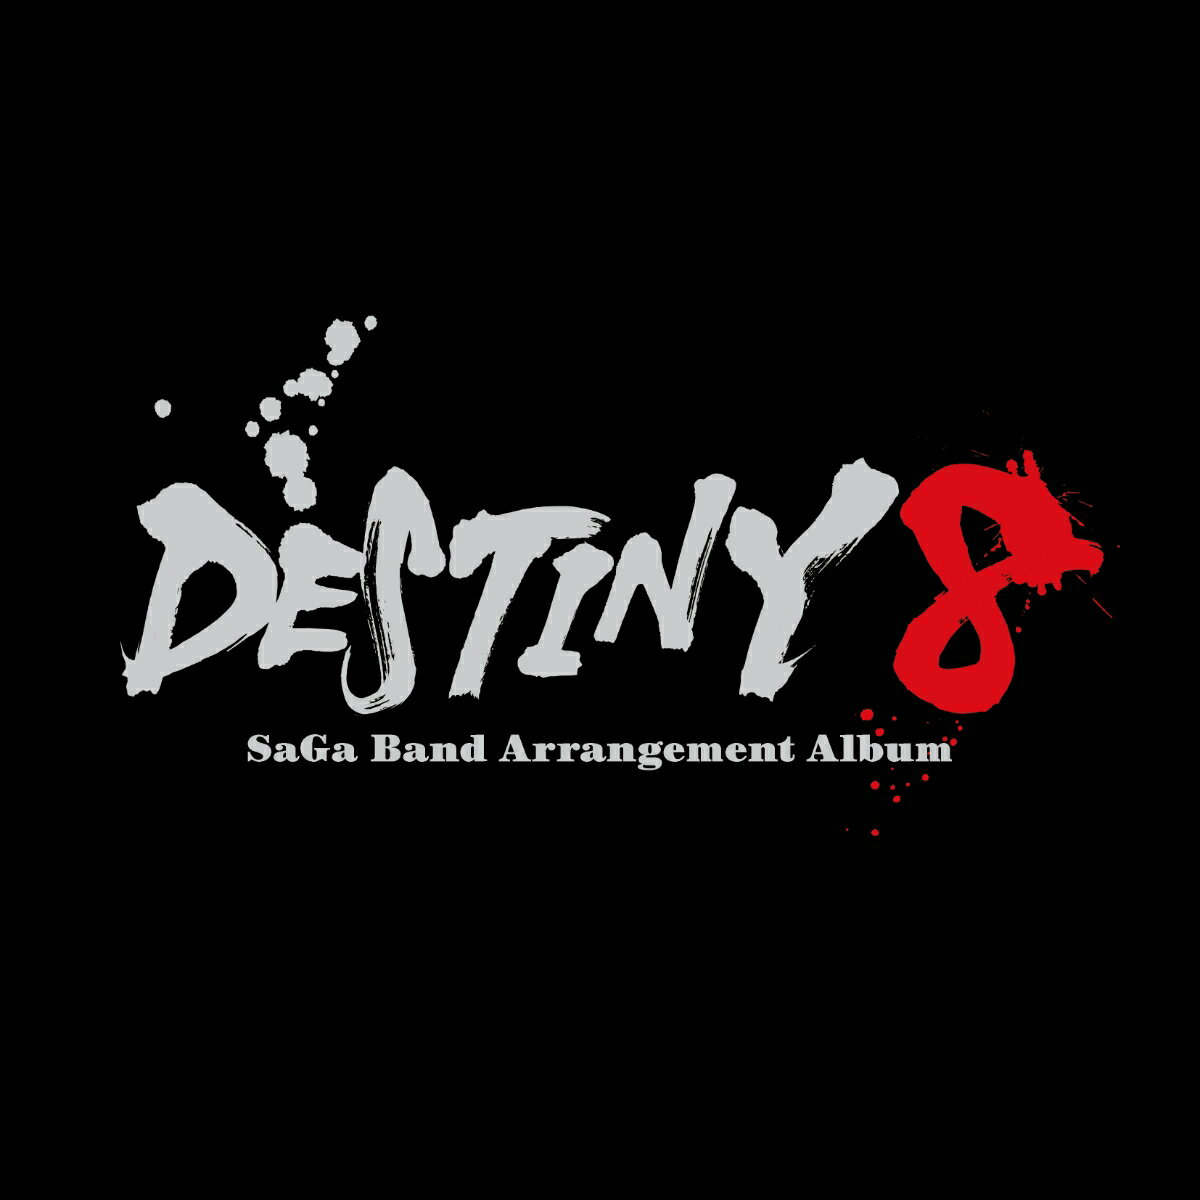 DESTINY 8 - SaGa Band Arrangement Album (ゲーム ミュージック)